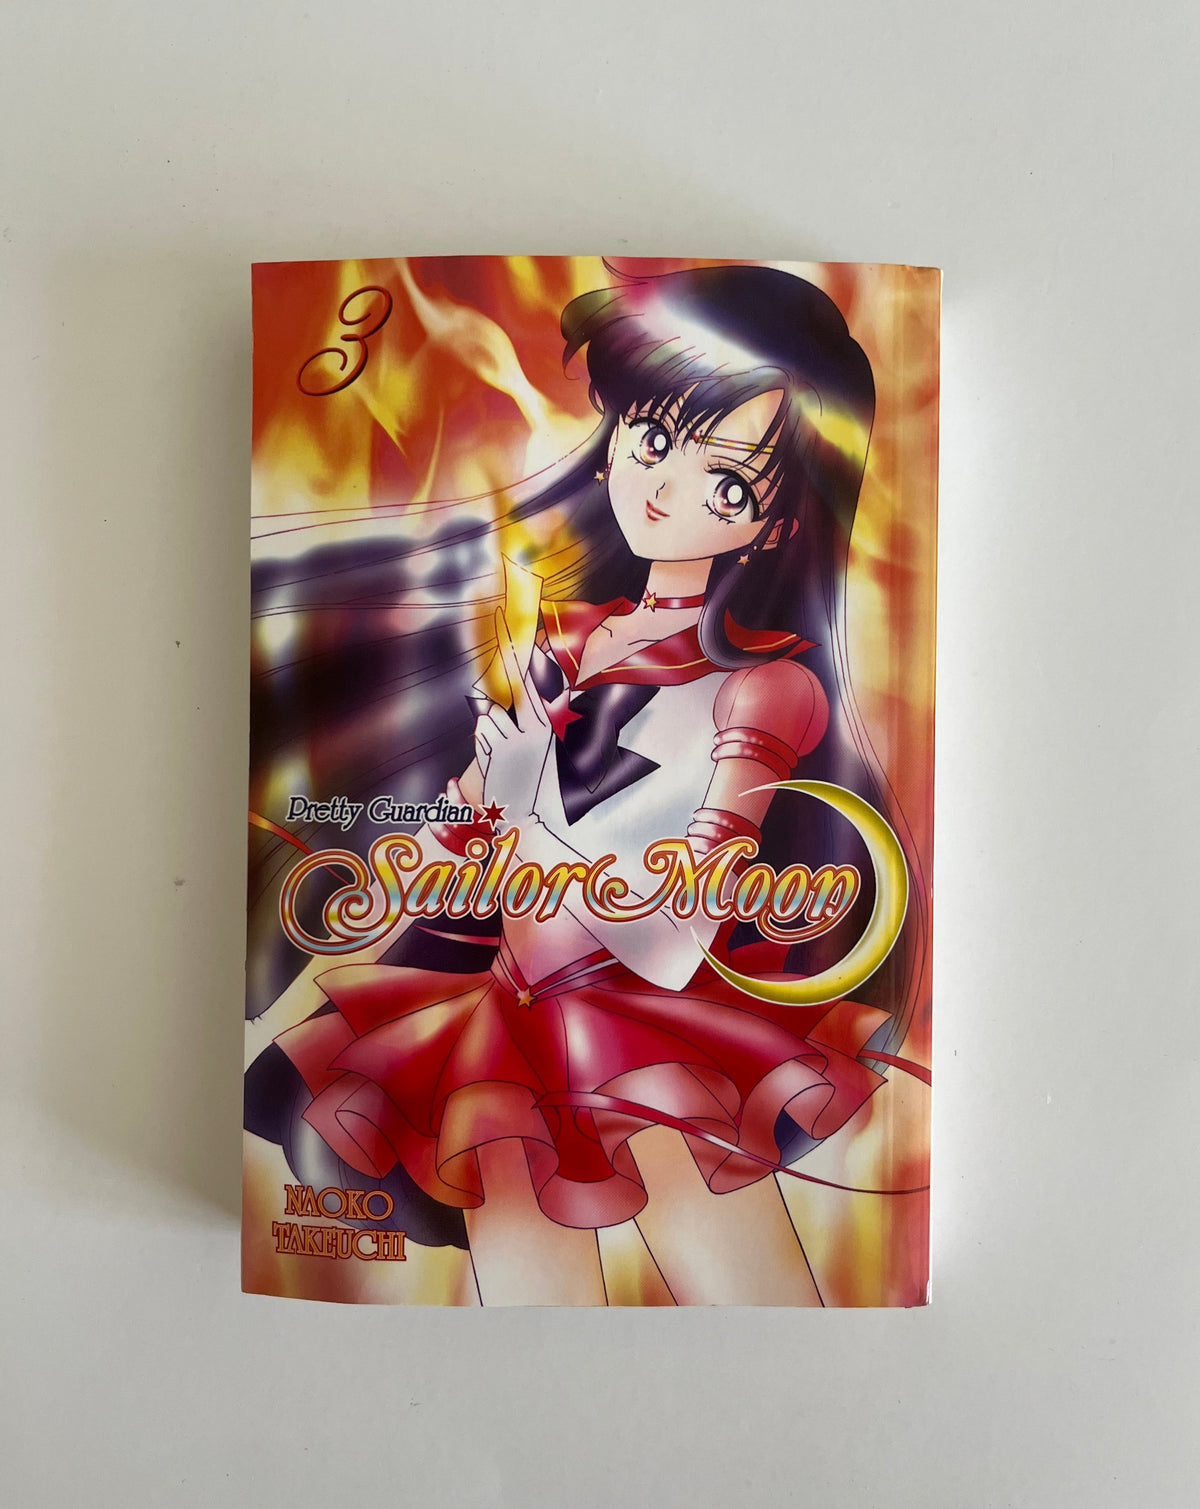 Sailor Moon 3 by Naoko Takeuchi